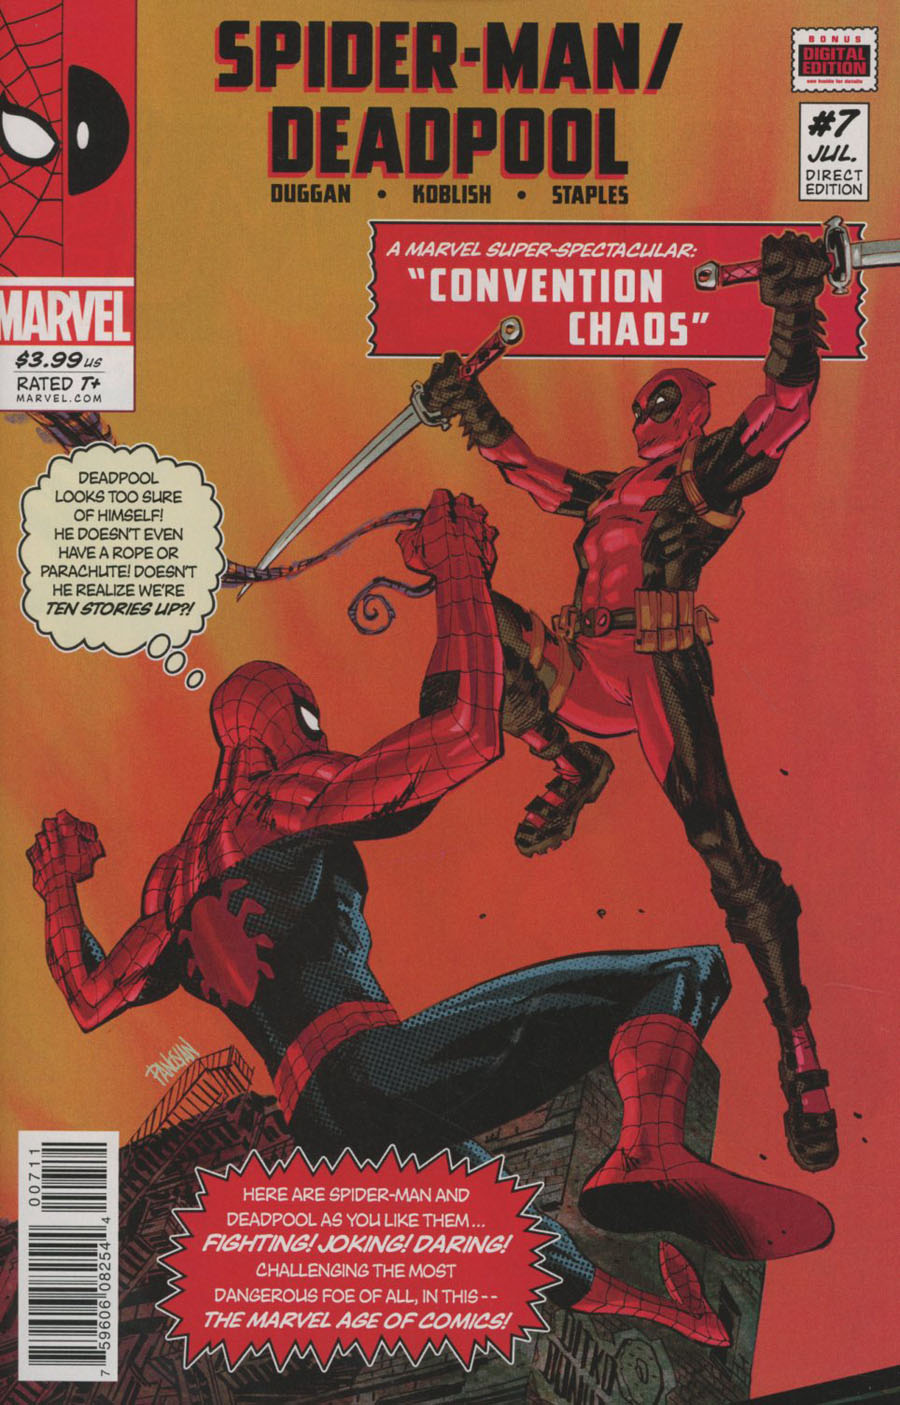 Spider-Man Deadpool #7